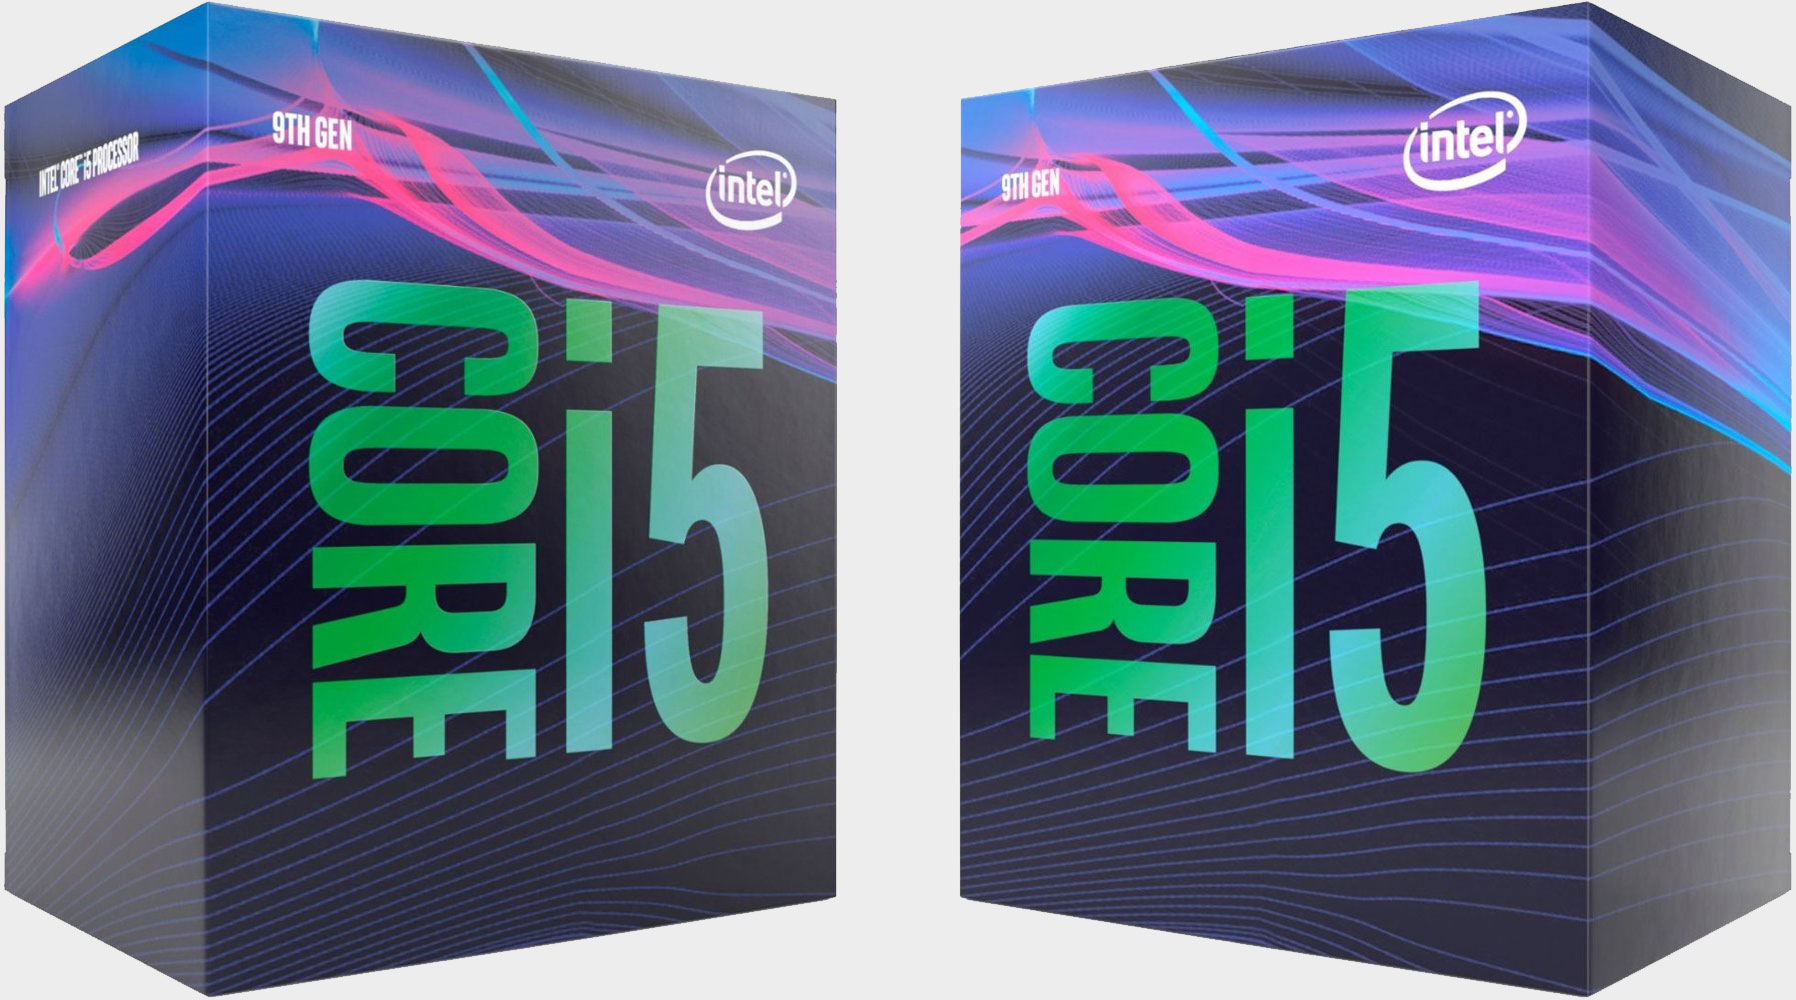 Intel Core i5 9400F | PC Gamer